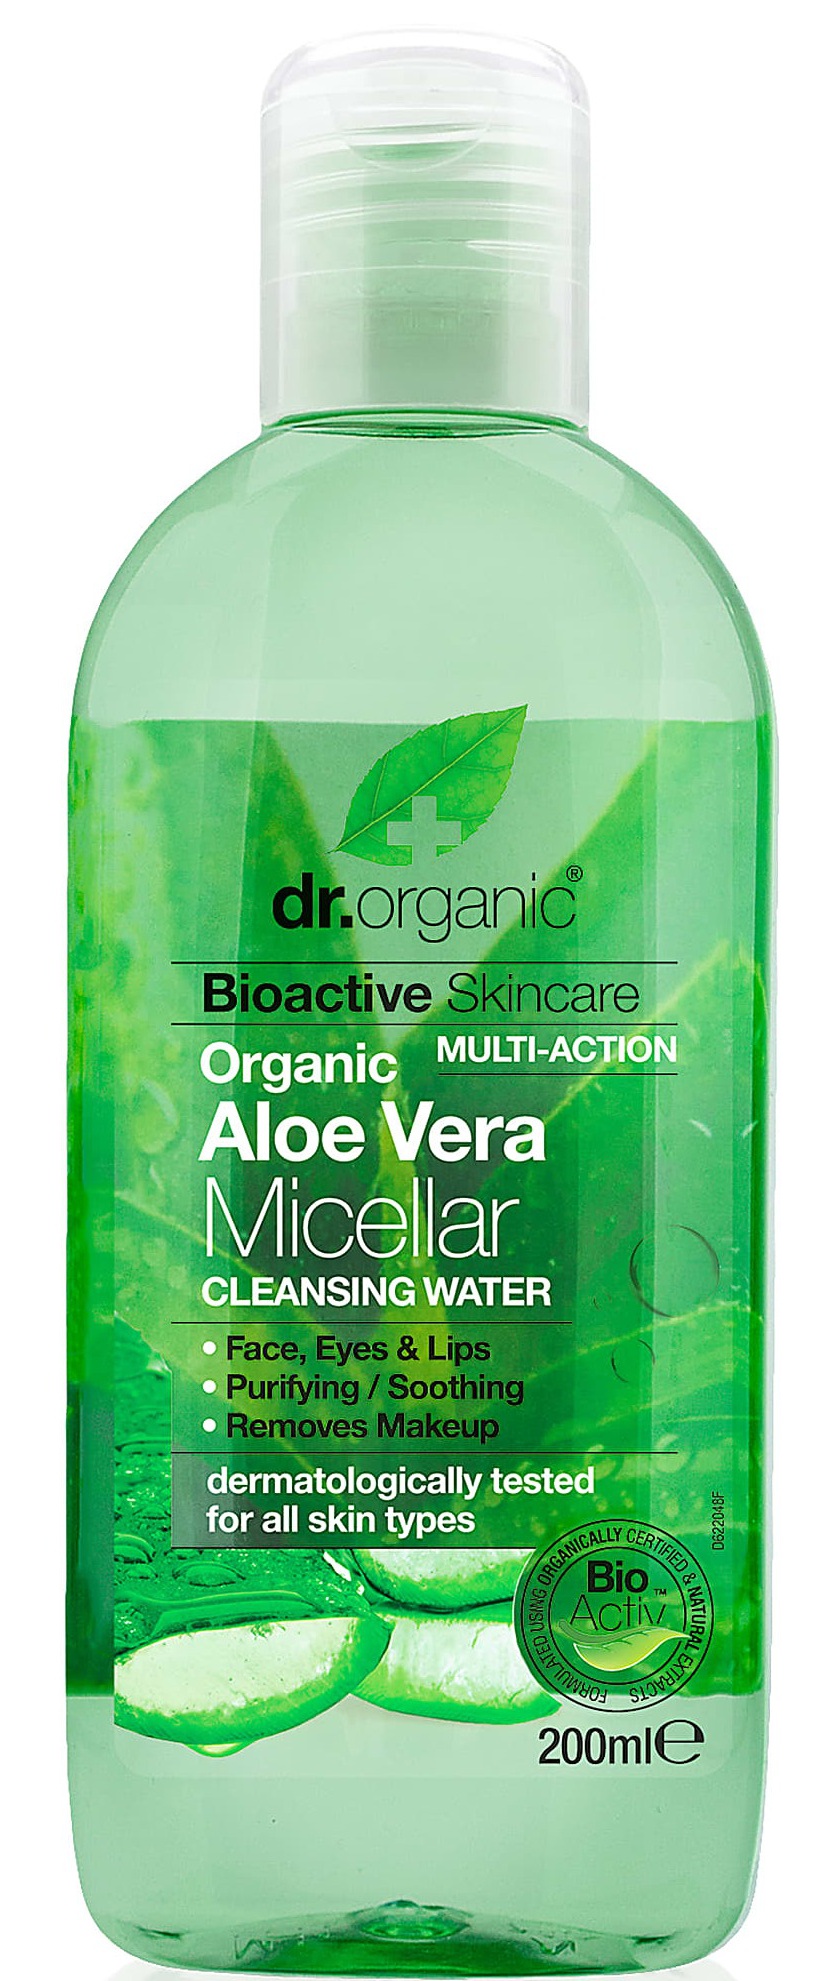 Dr Organic Aloe Vera Micellar Cleansing Water